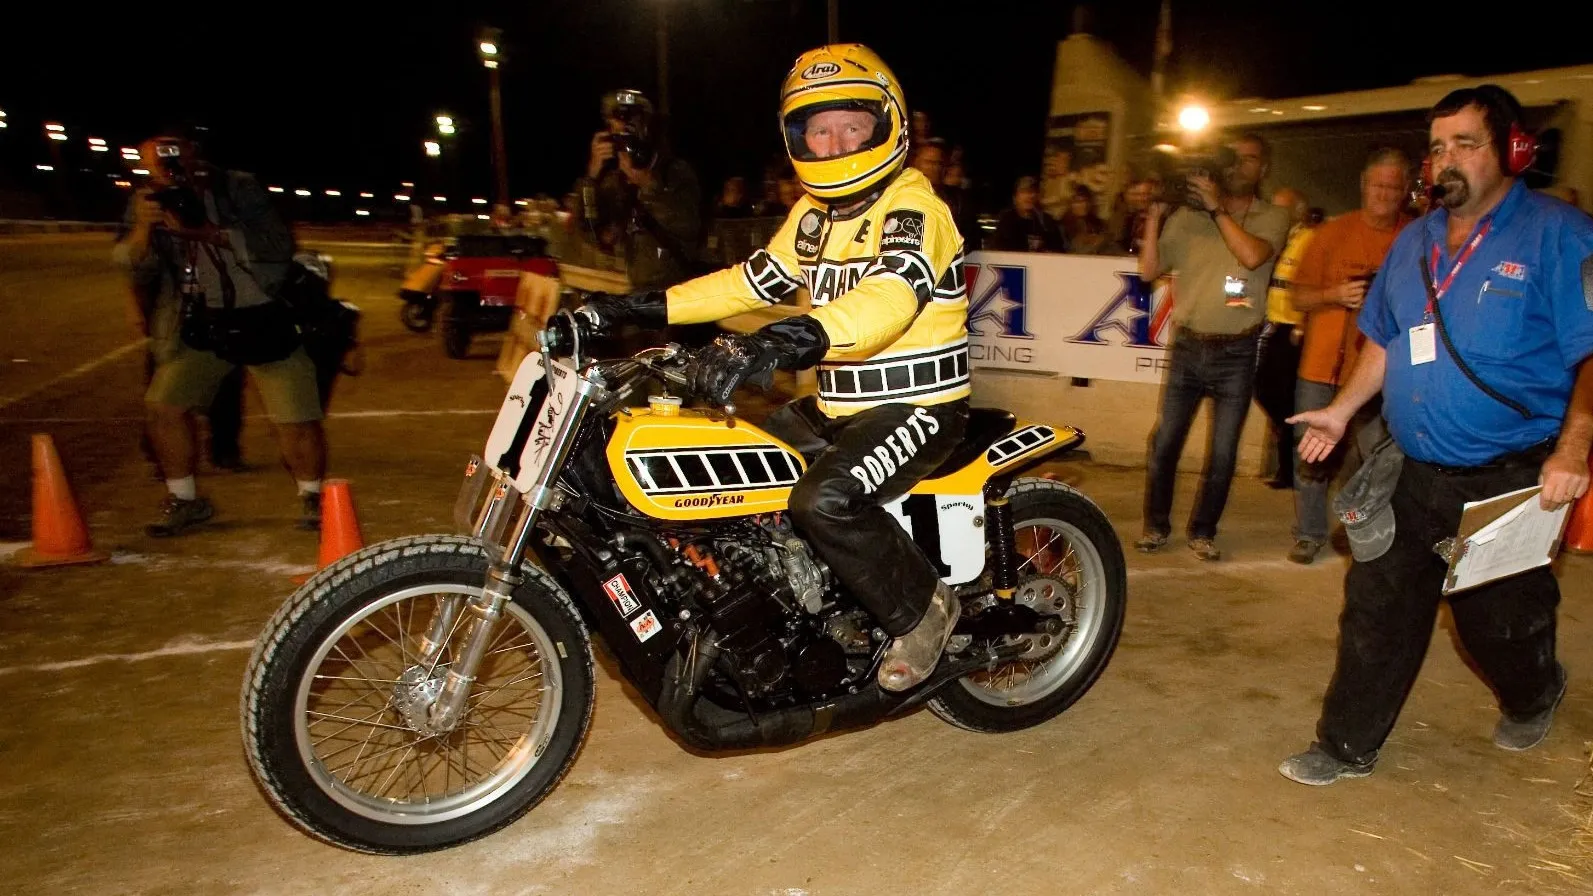 Moto del día: Yamaha TZ750 Kenny Roberts